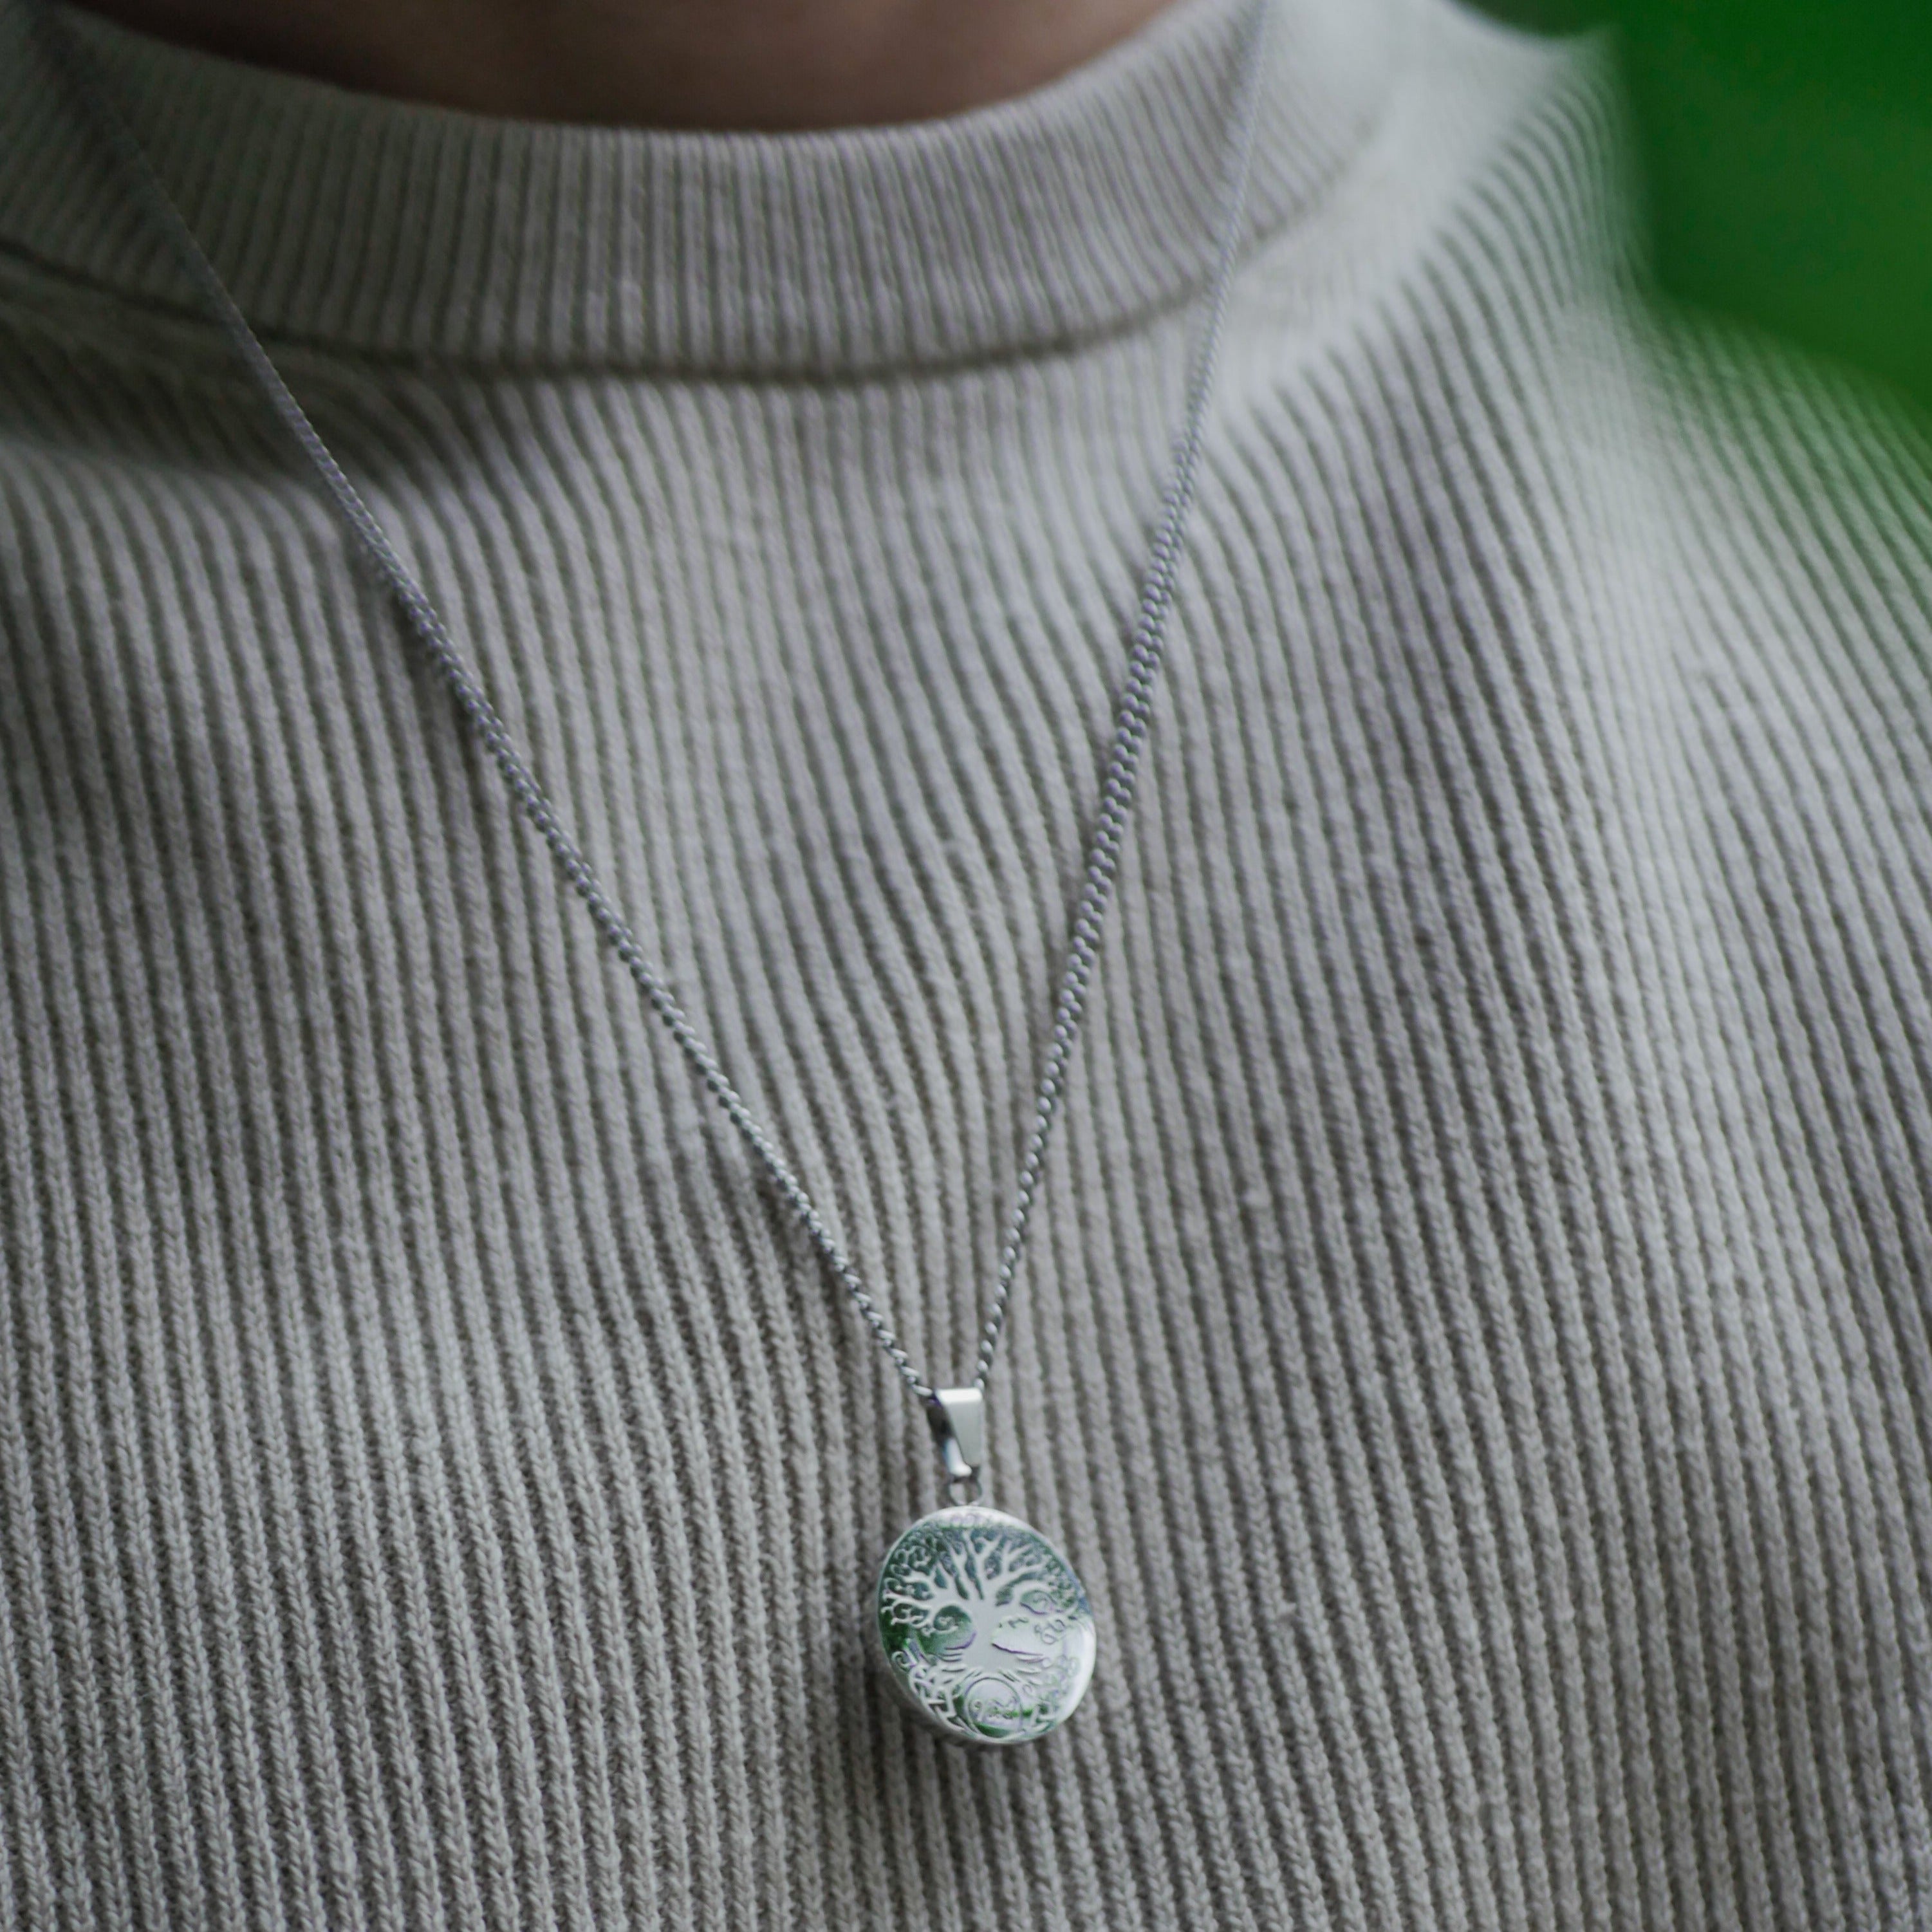 NL Yggdrasil pendant - Silver-toned